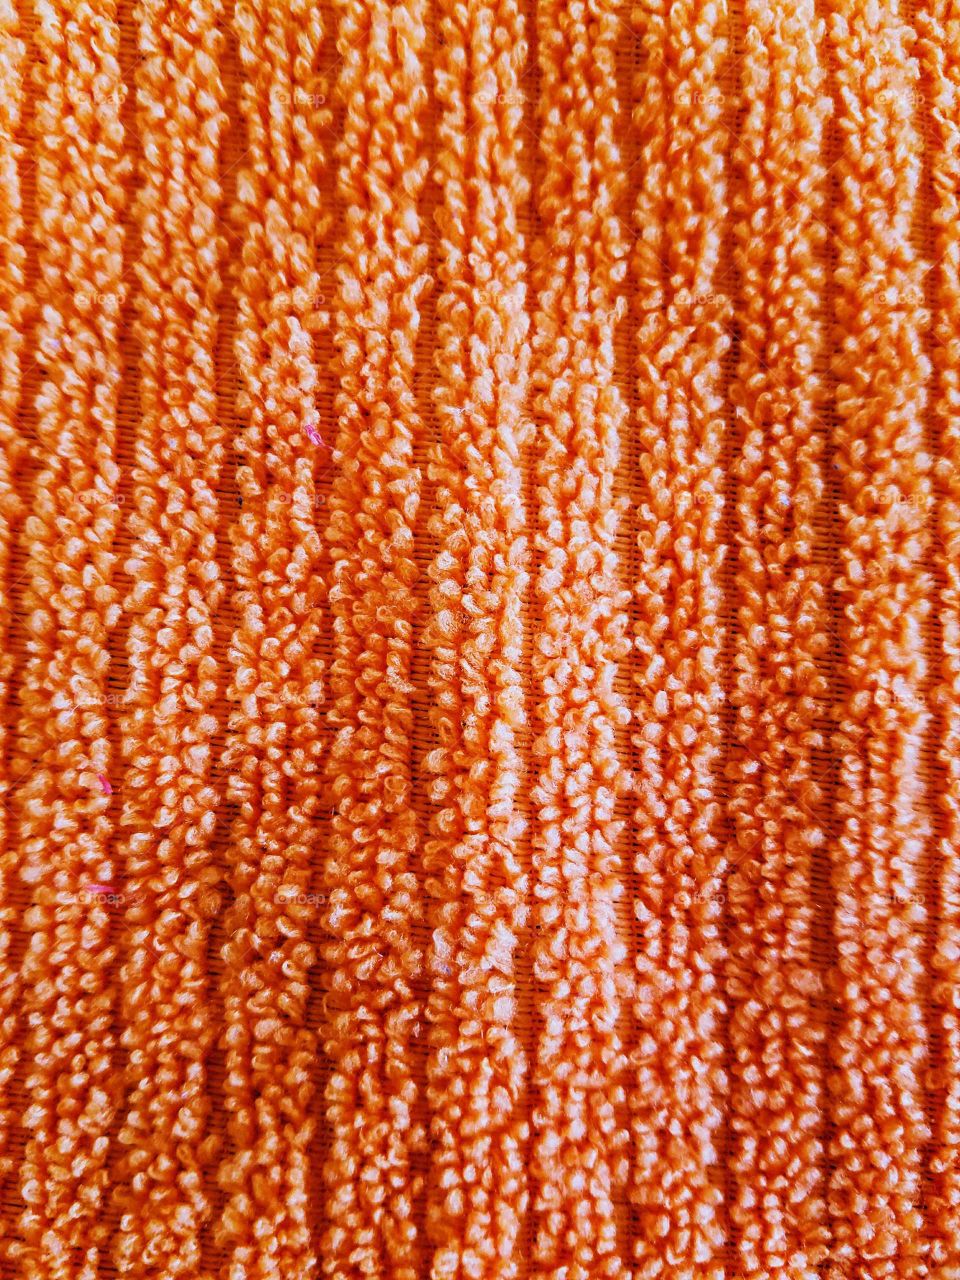 Close-up of fabric